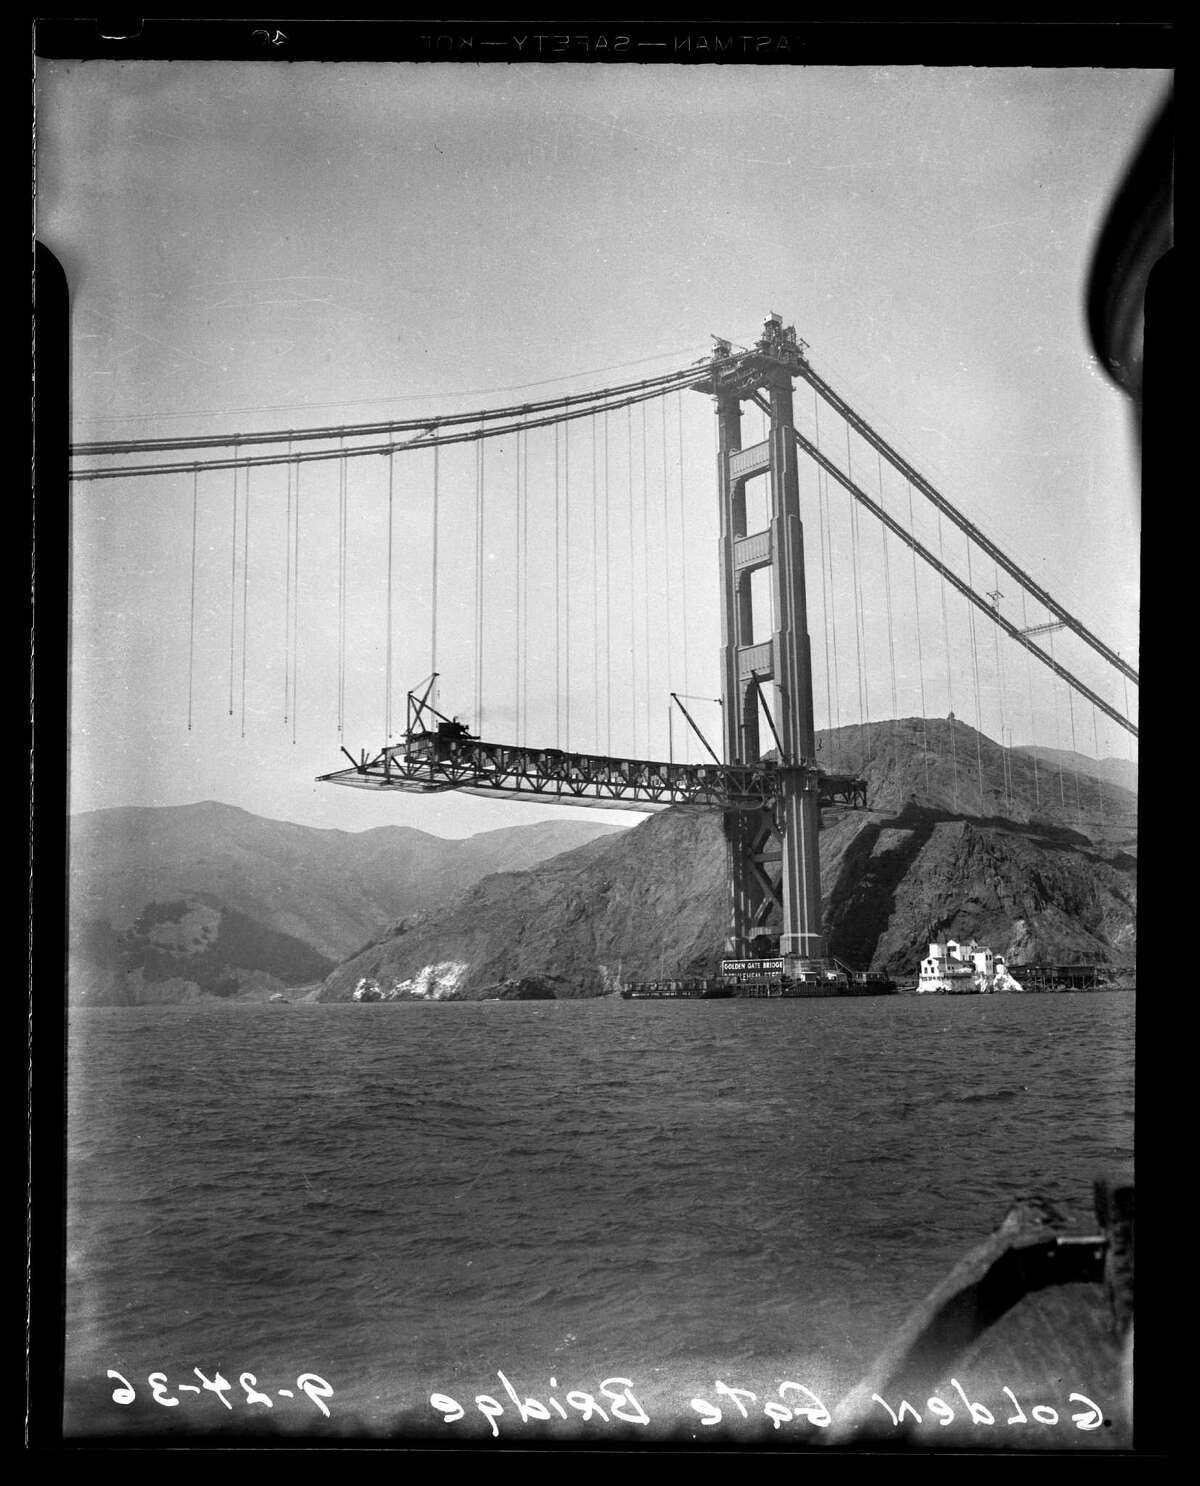 The Golden Gate Bridge under construction on Sept. 24, 1936.